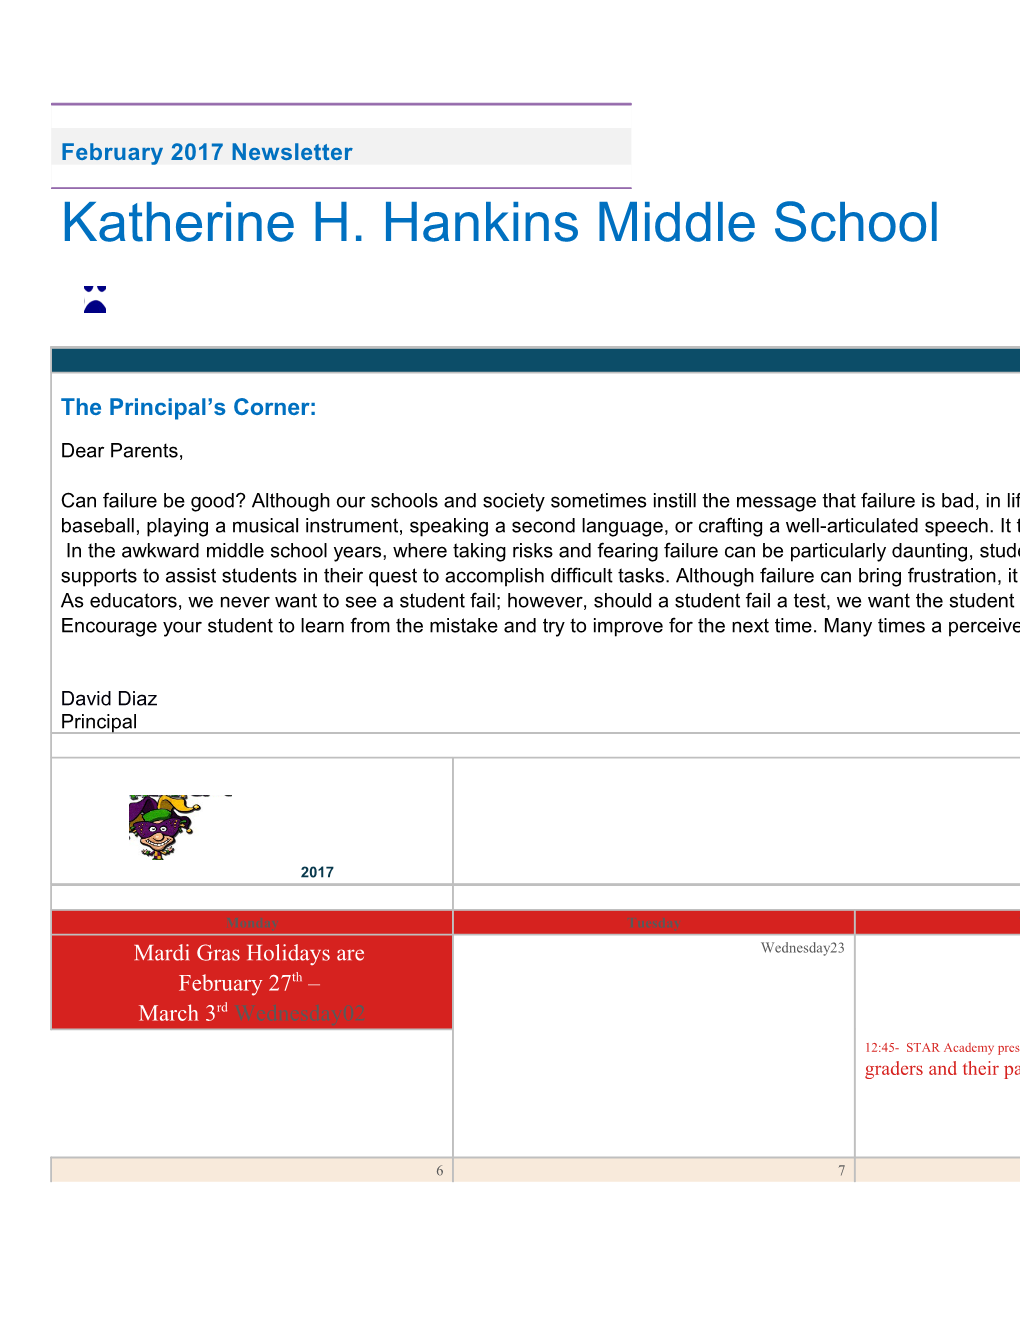 Katherine H. Hankins Middle School